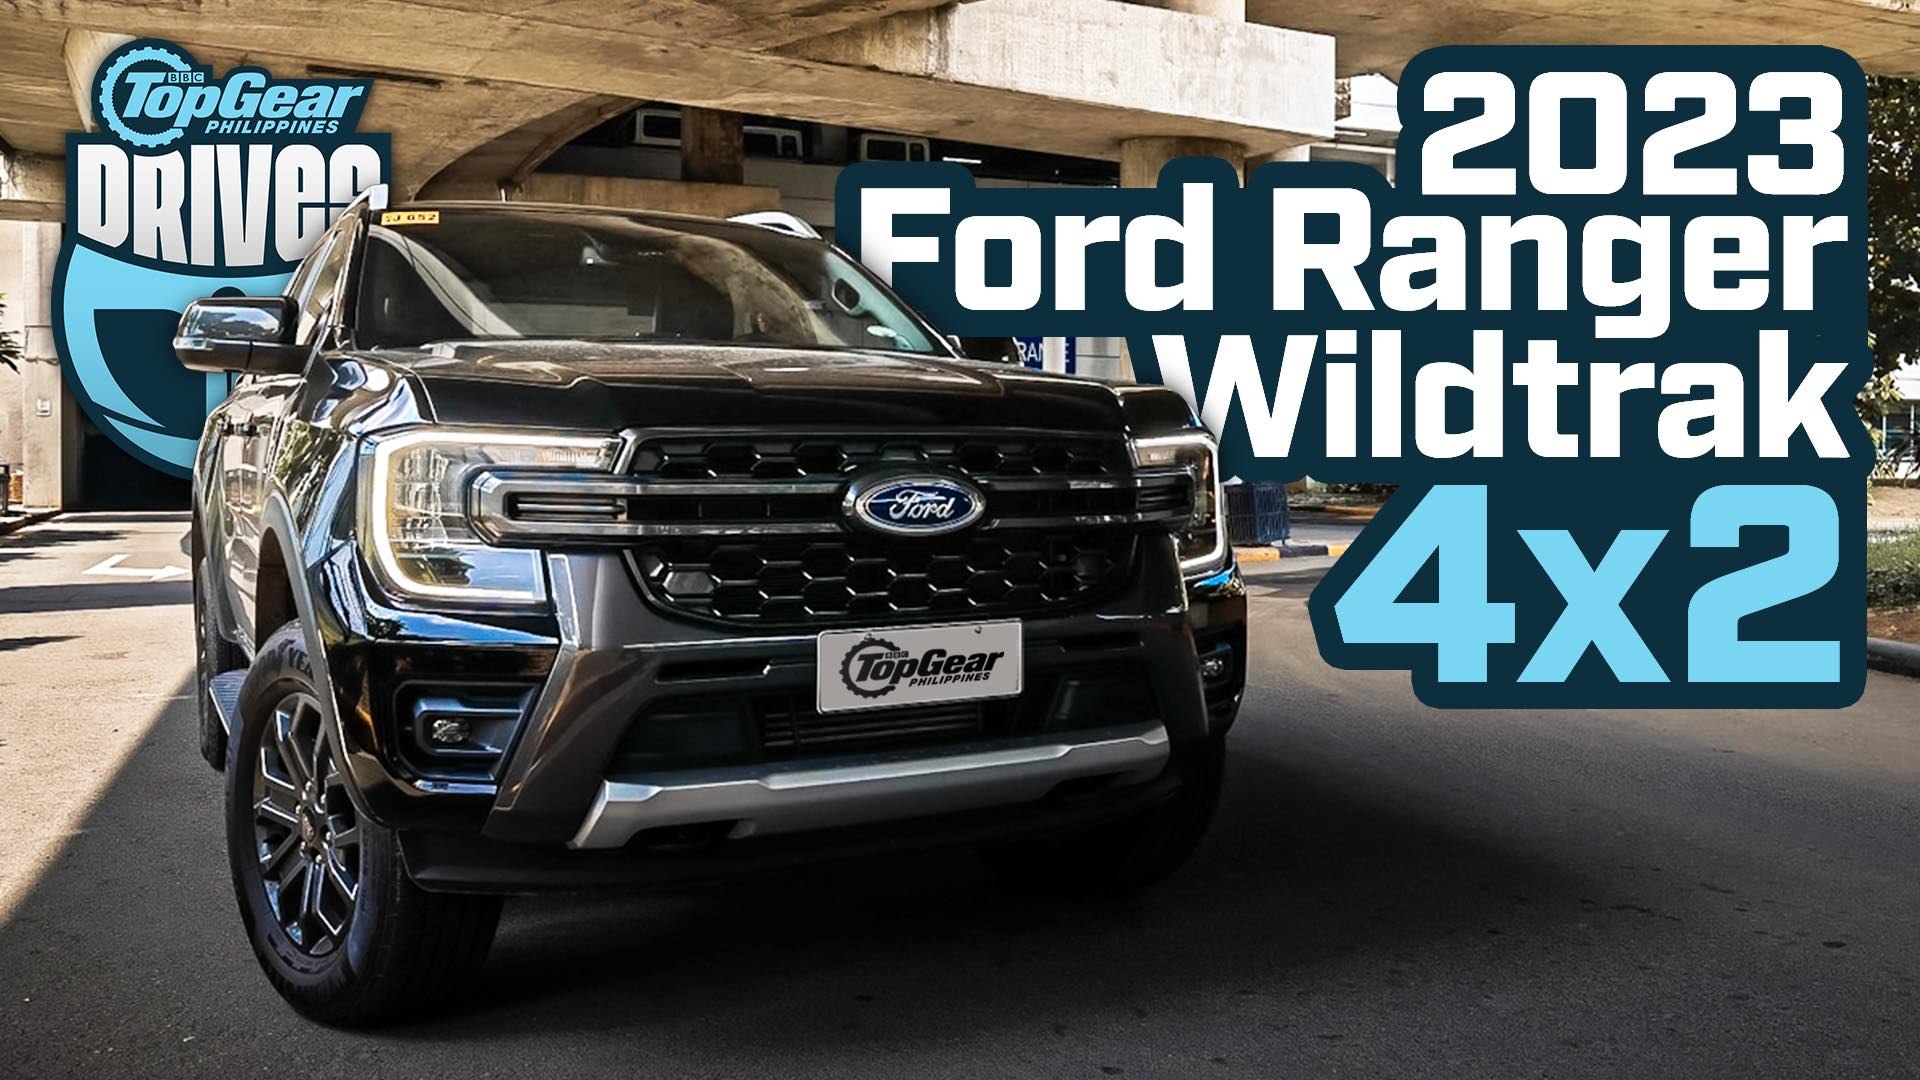 2023 Ford Ranger Wildtrak 4x2, Top-spec 4x2 pickup tested!